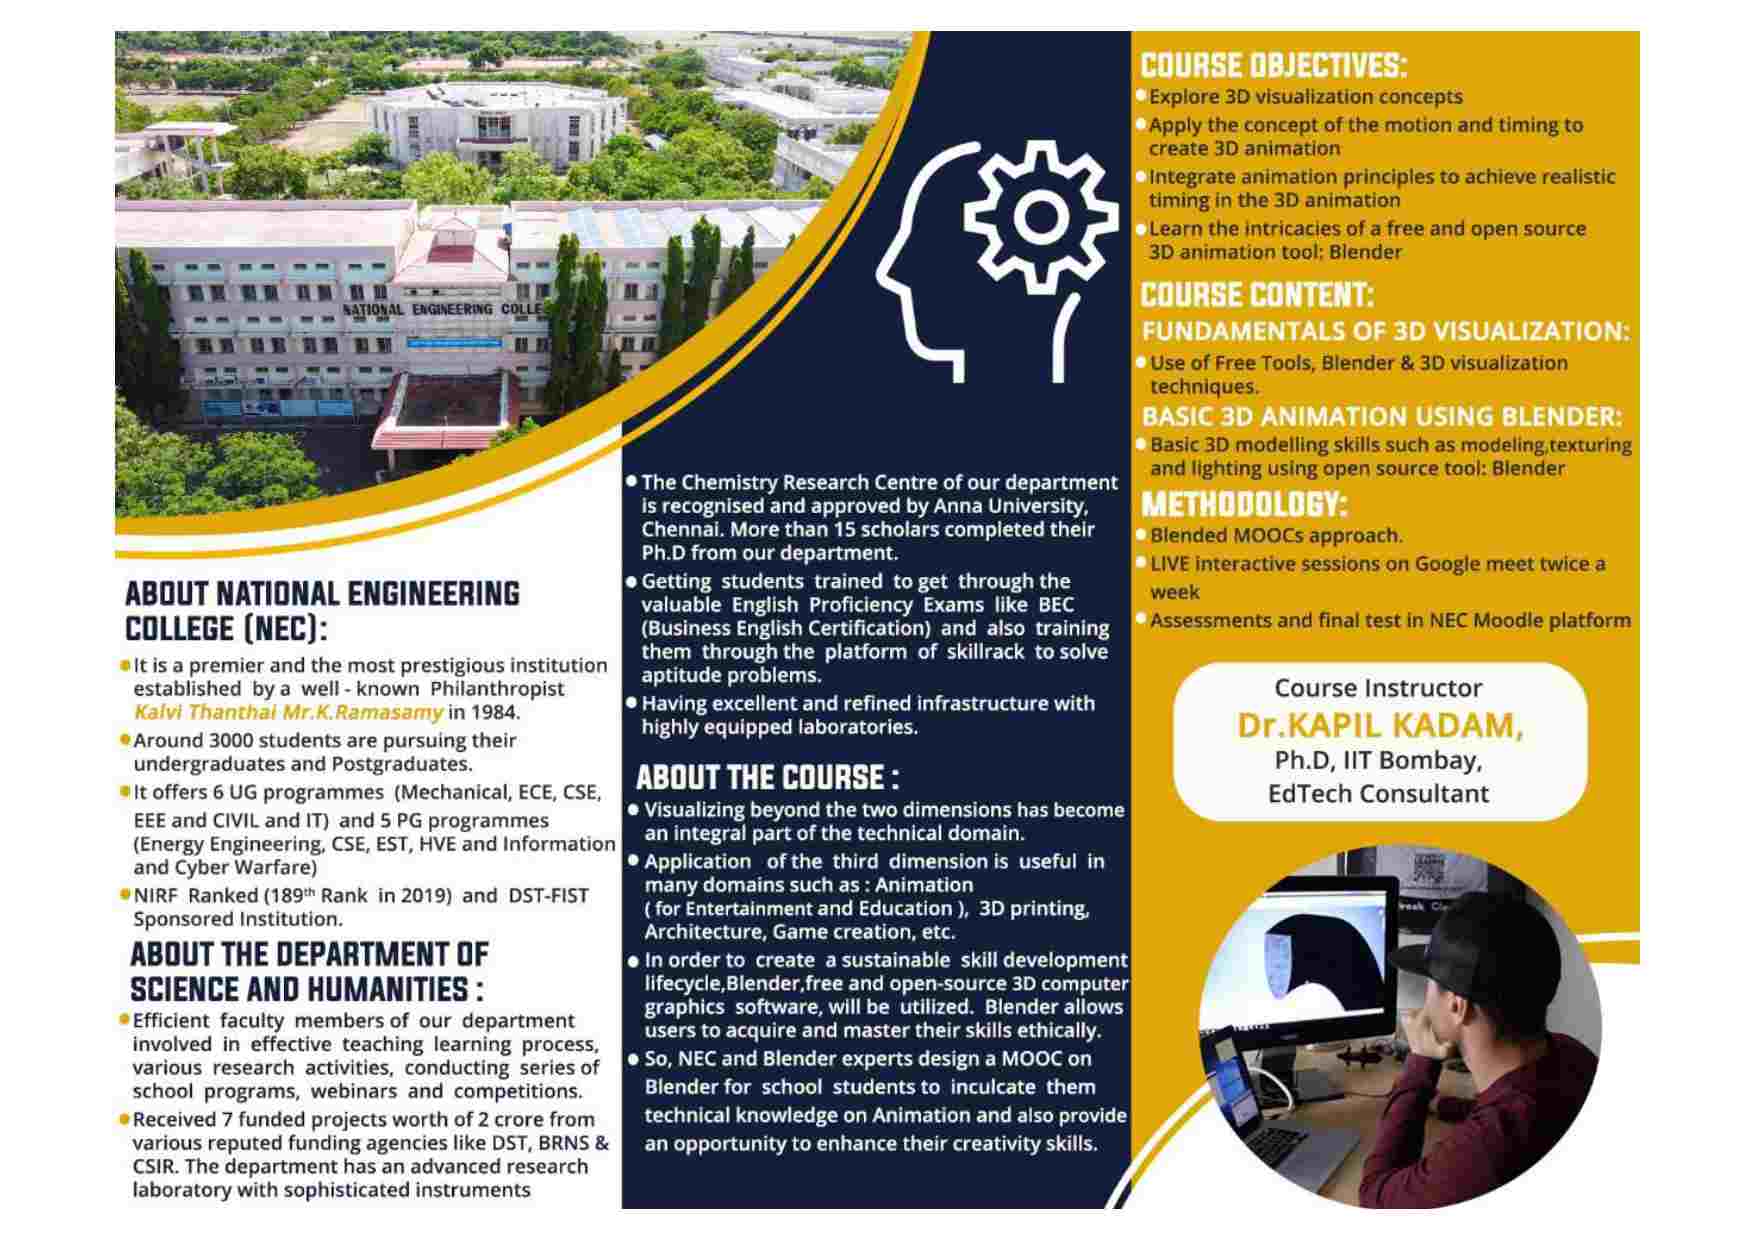 sh_blender_workshop - National Engineering College